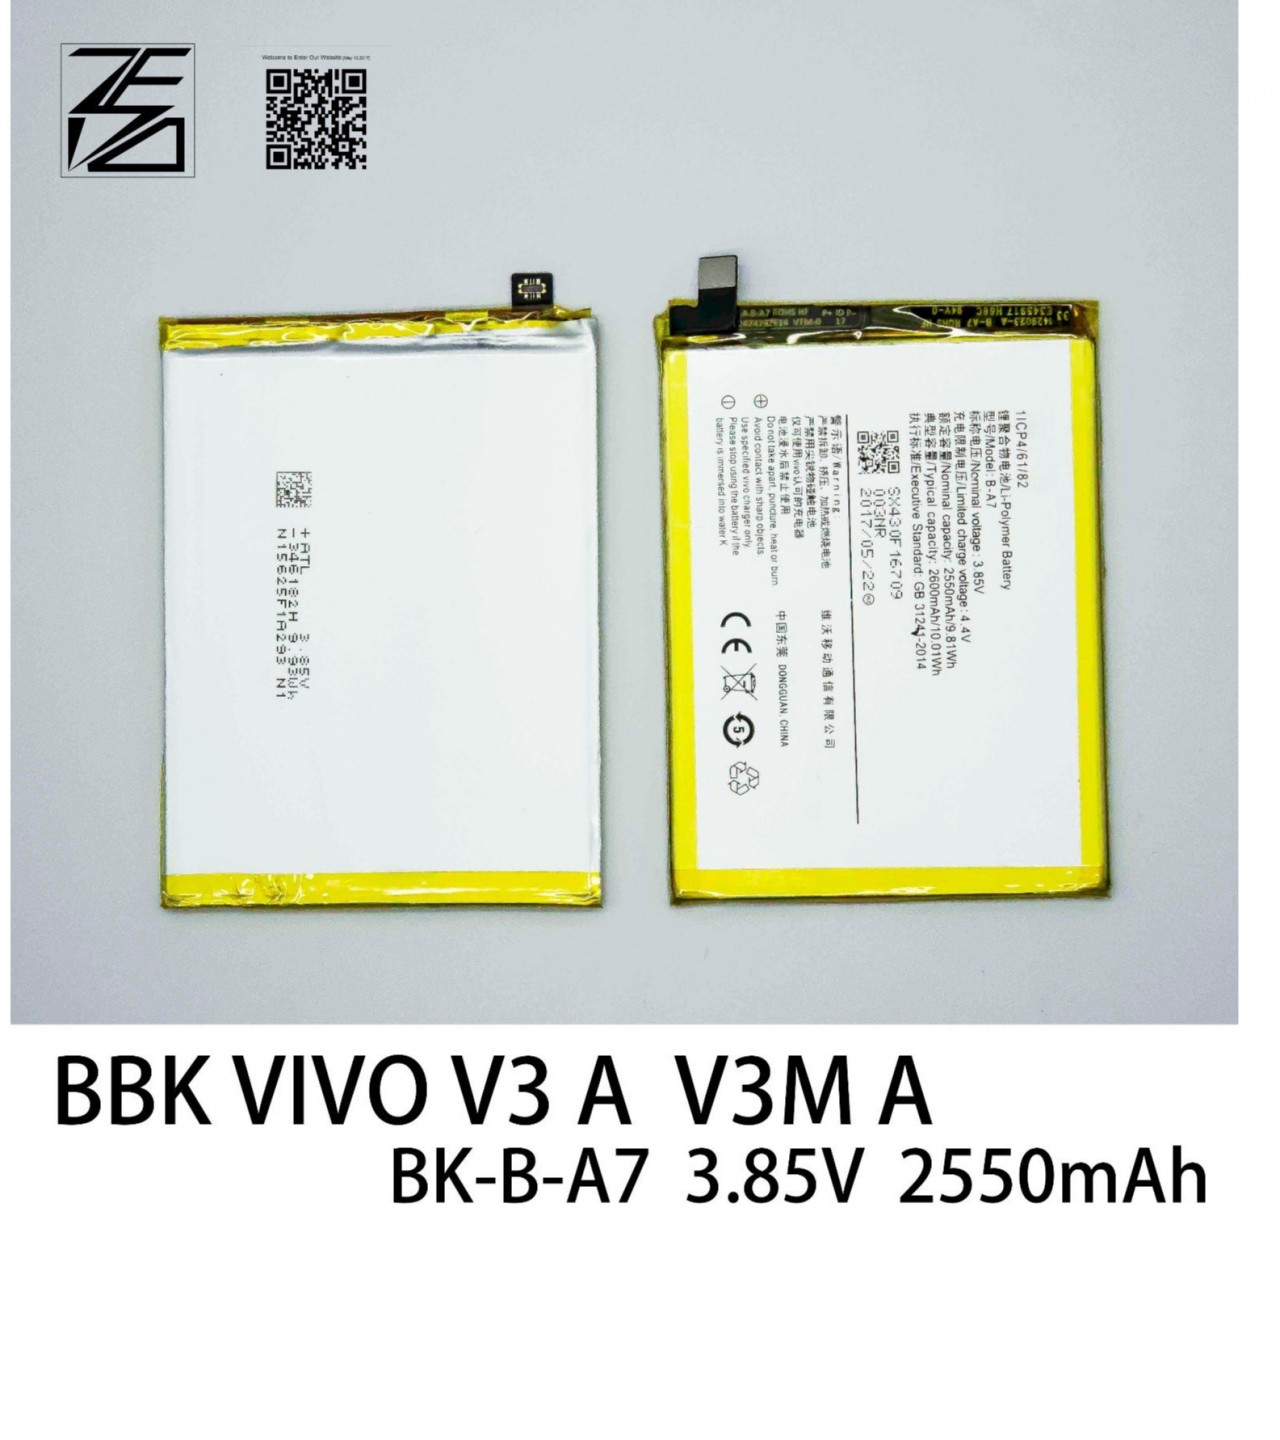 Vivo B-A7 Battery for Vivo V3, V3M with 2550 mAh capacity